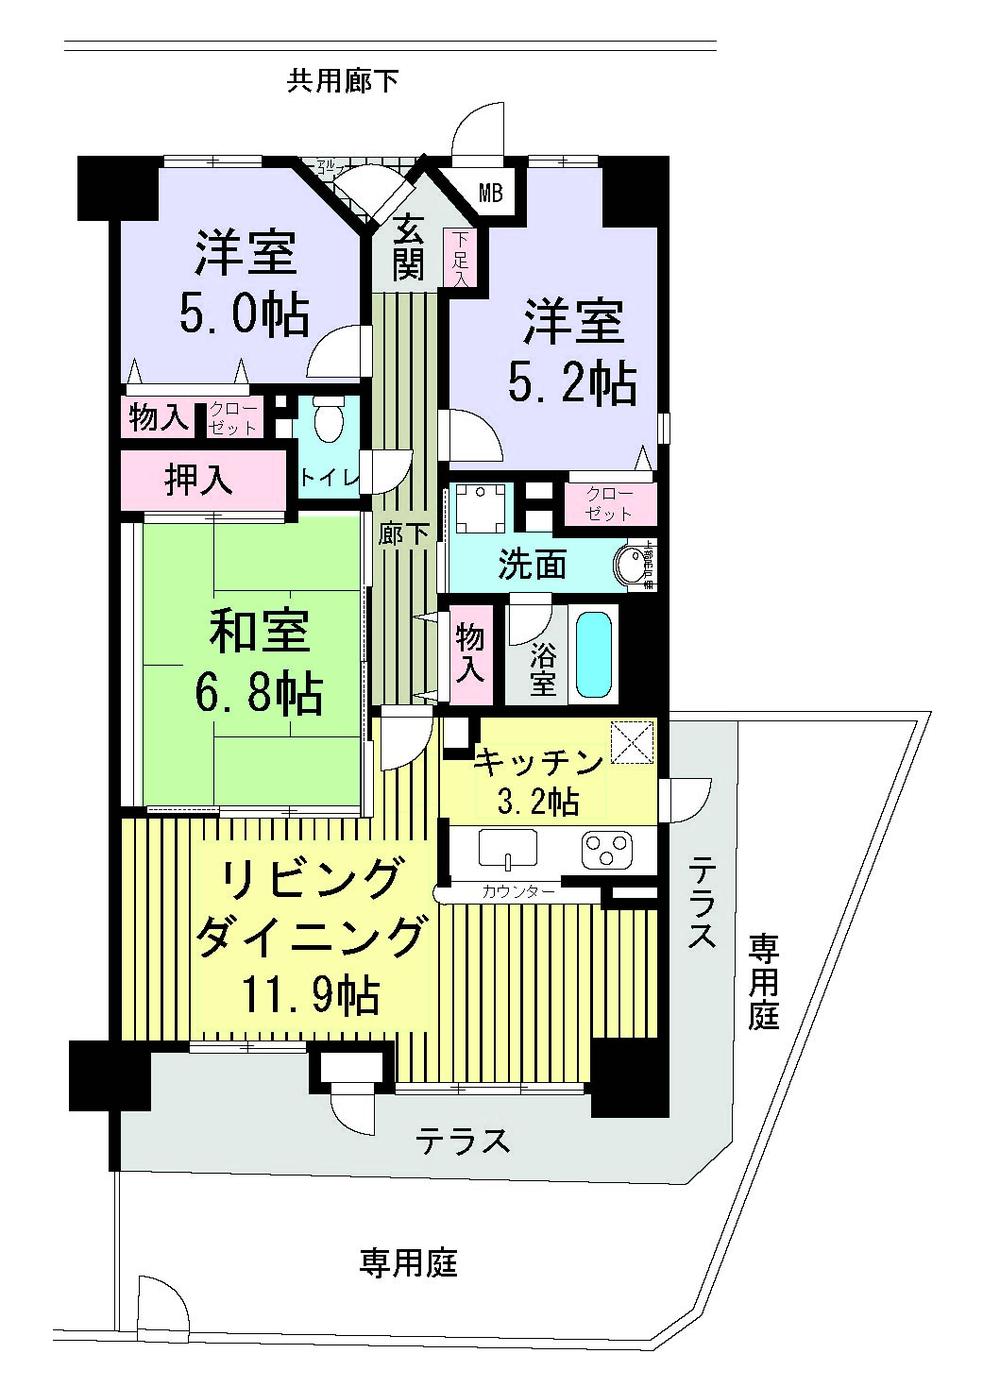 Floor plan. 3LDK, Price 11.8 million yen, Occupied area 72.21 sq m